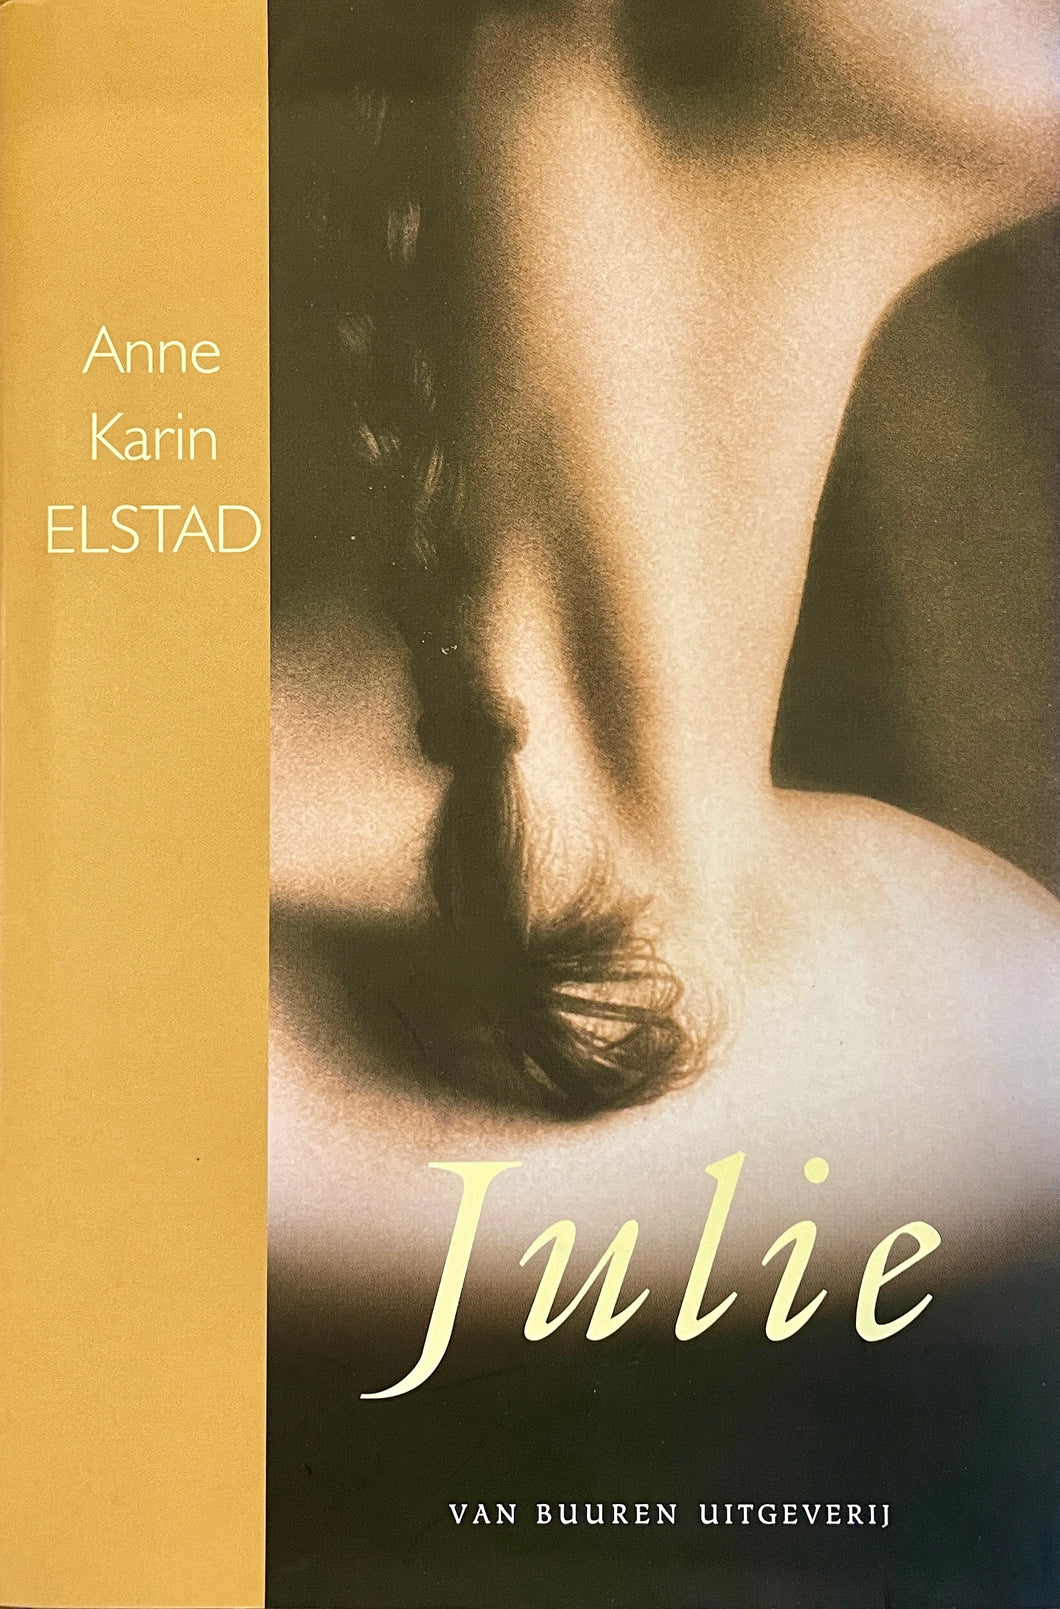 Elstad Anne Karin - Julie